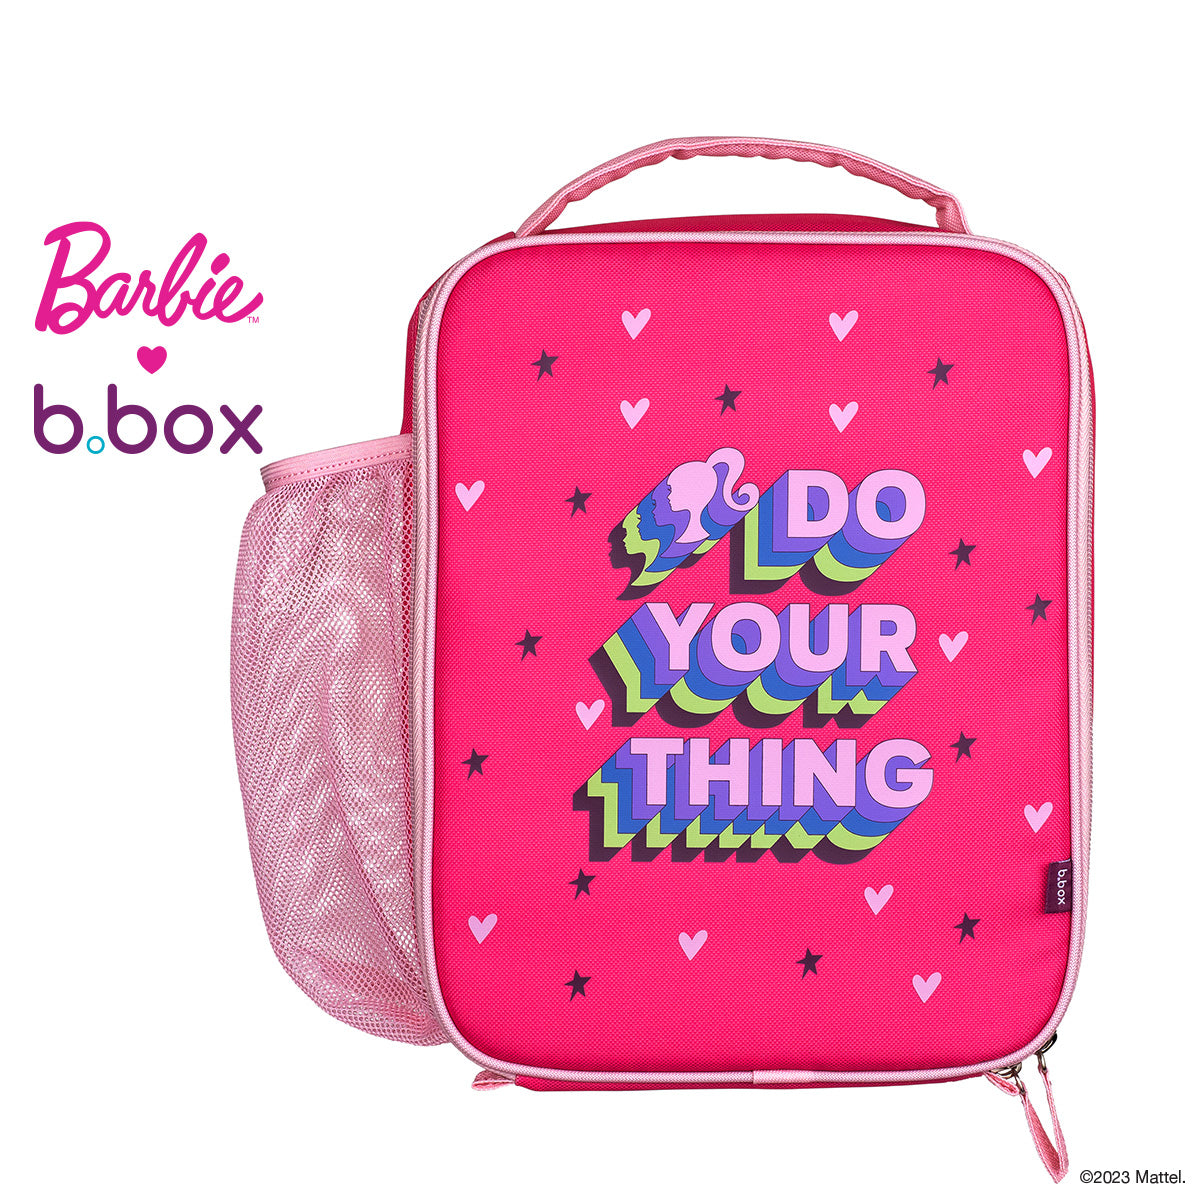 b.box Mini Lunch Box - Bluey